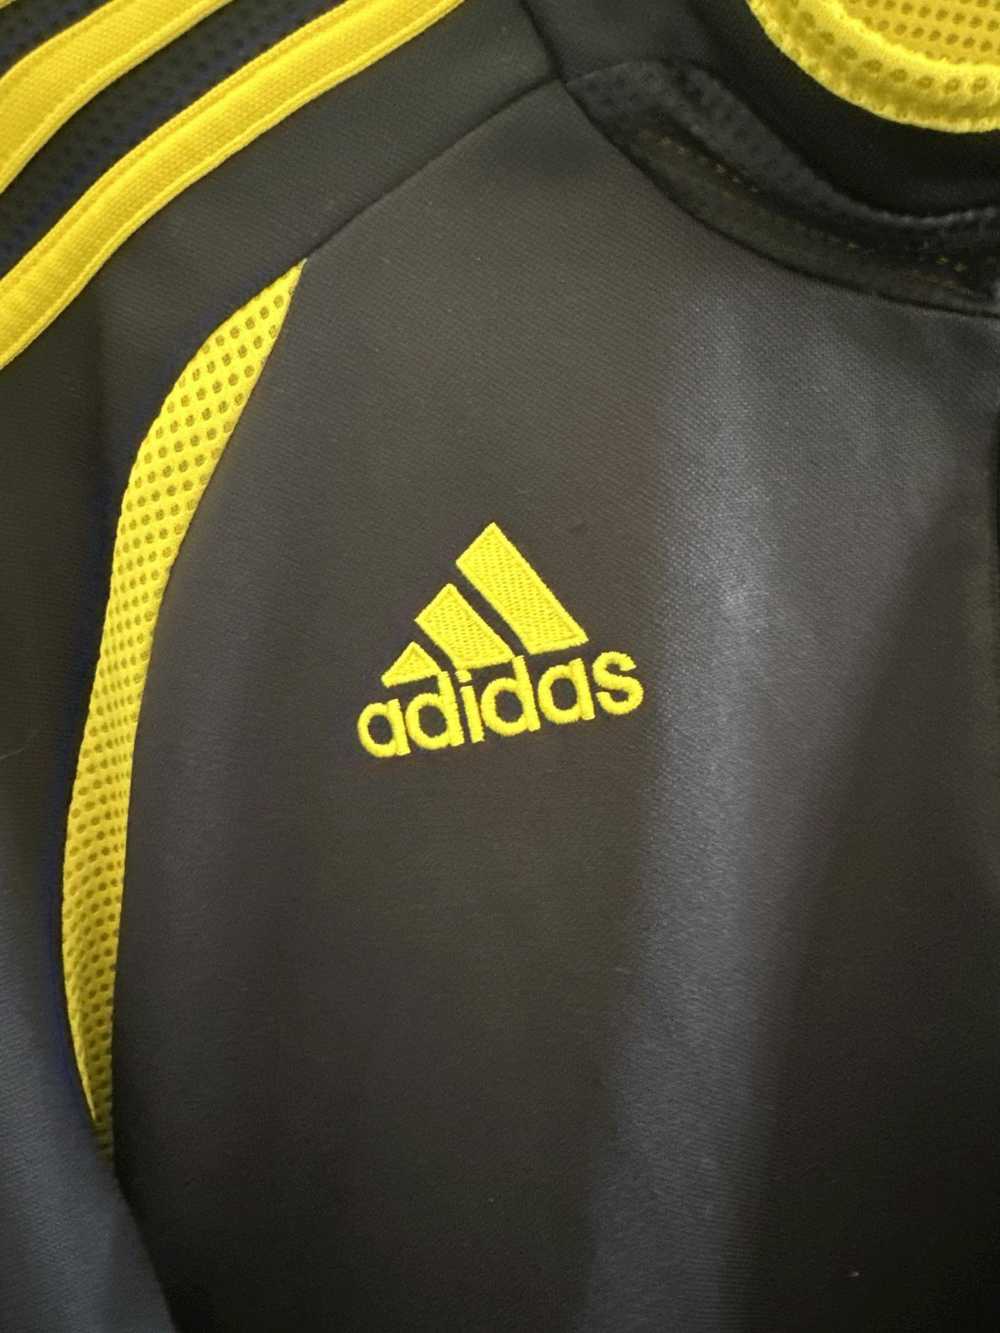 Adidas Adidas Columbus Crew 1/4 zip jacket - image 2